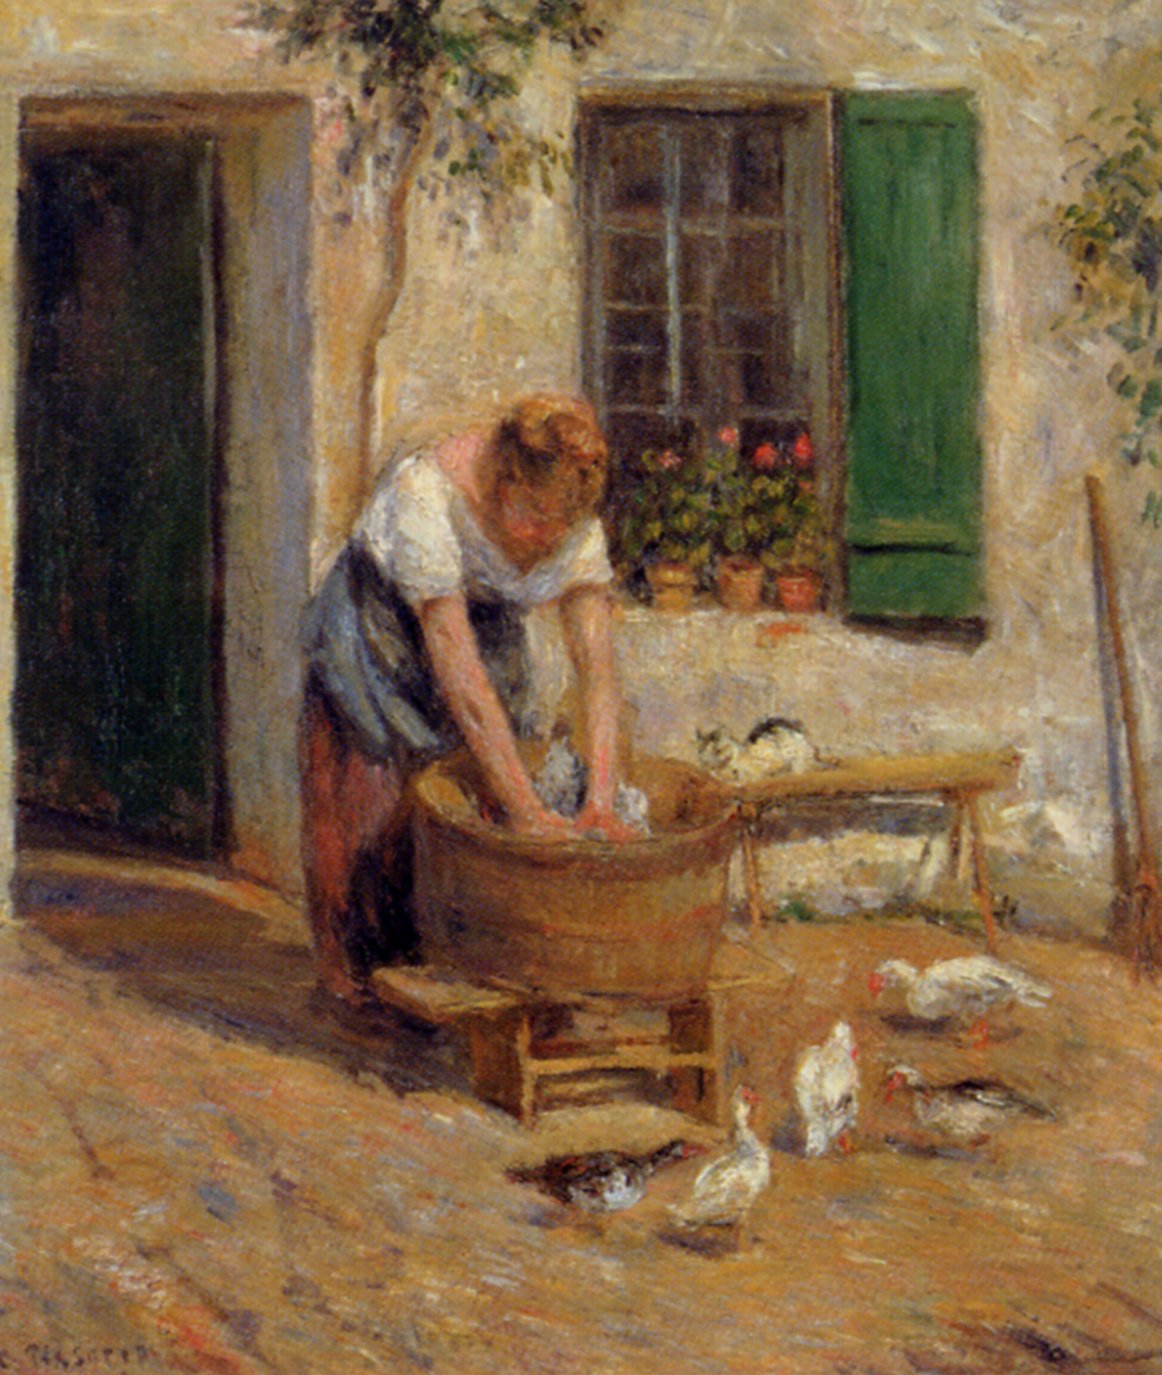 Camille+Pissarro-1830-1903 (227).jpg